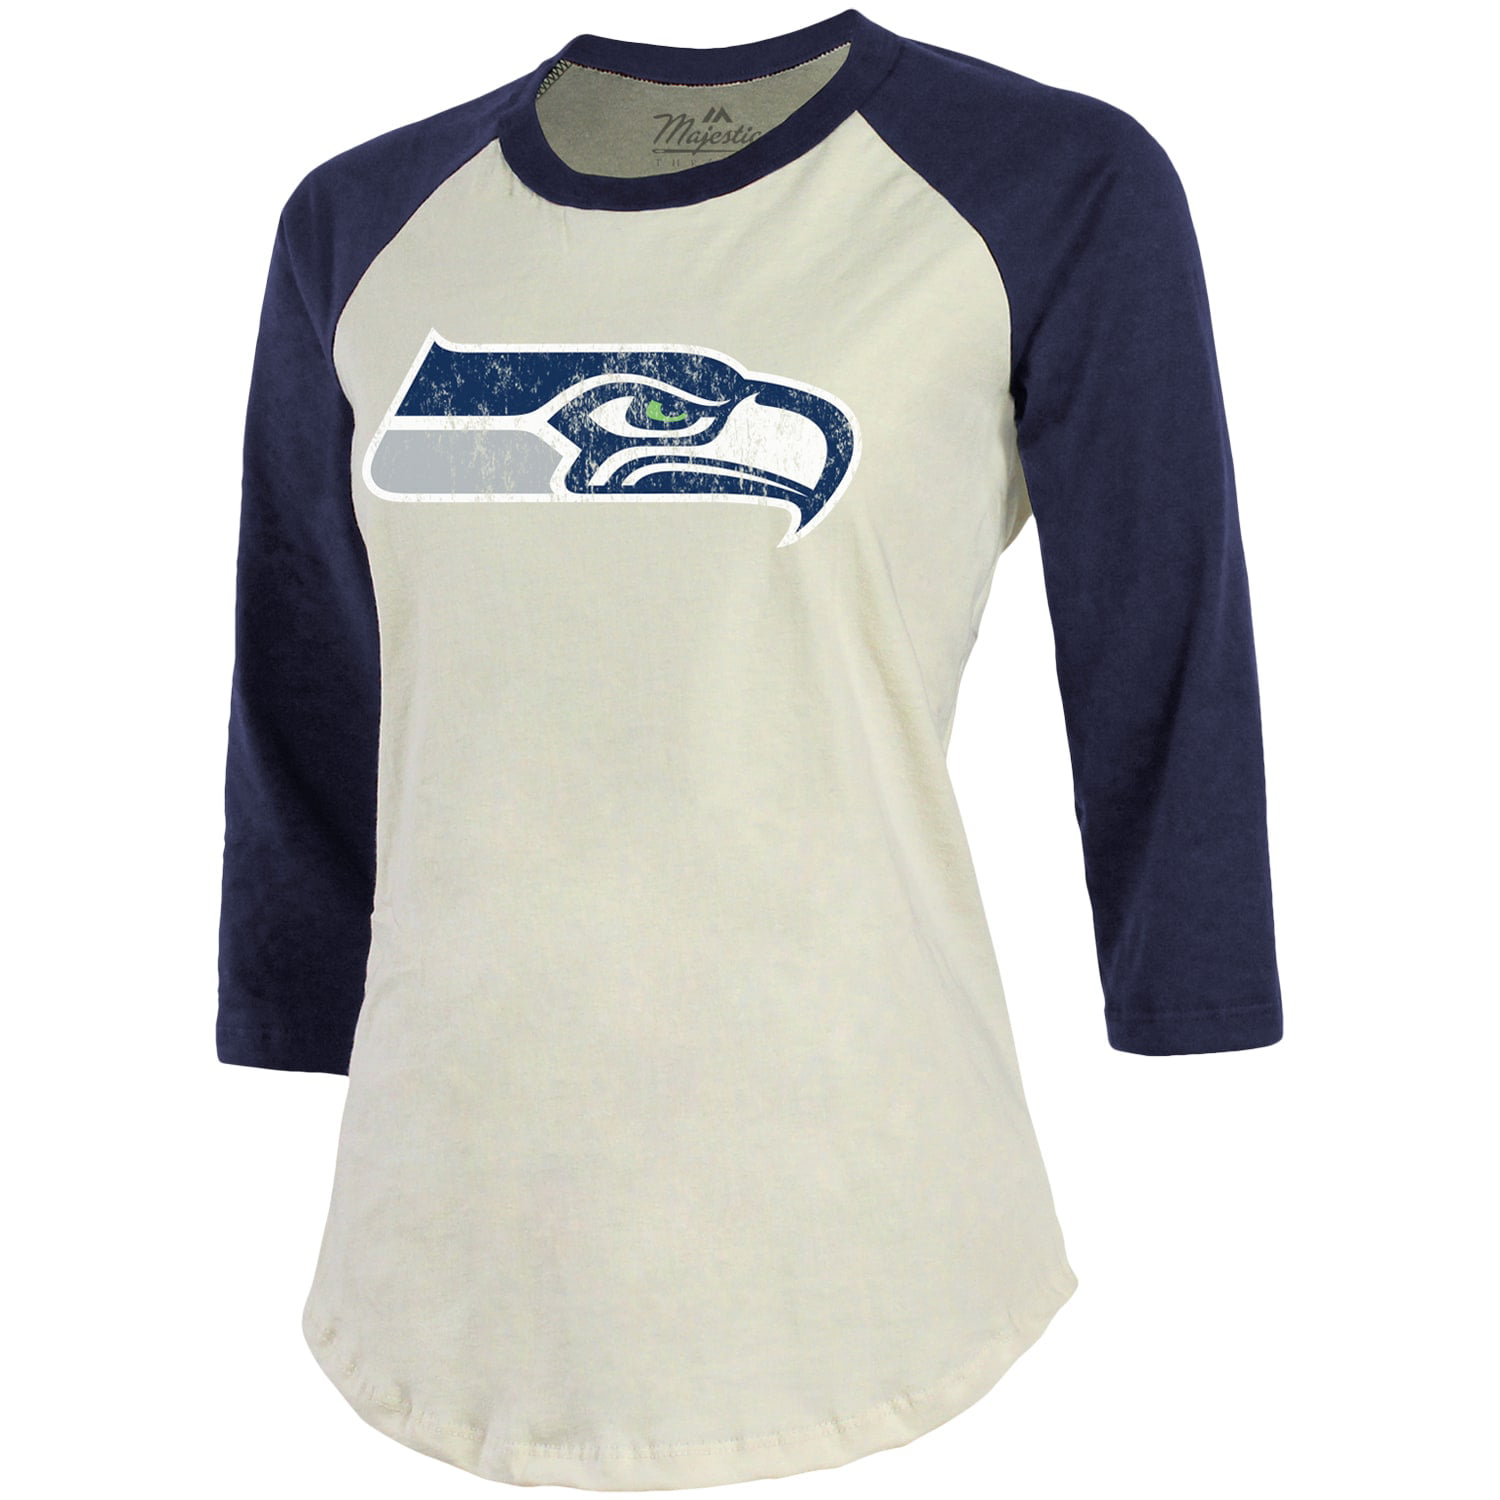 Vintage sheer Seattle Seahawks t shirt fits like S